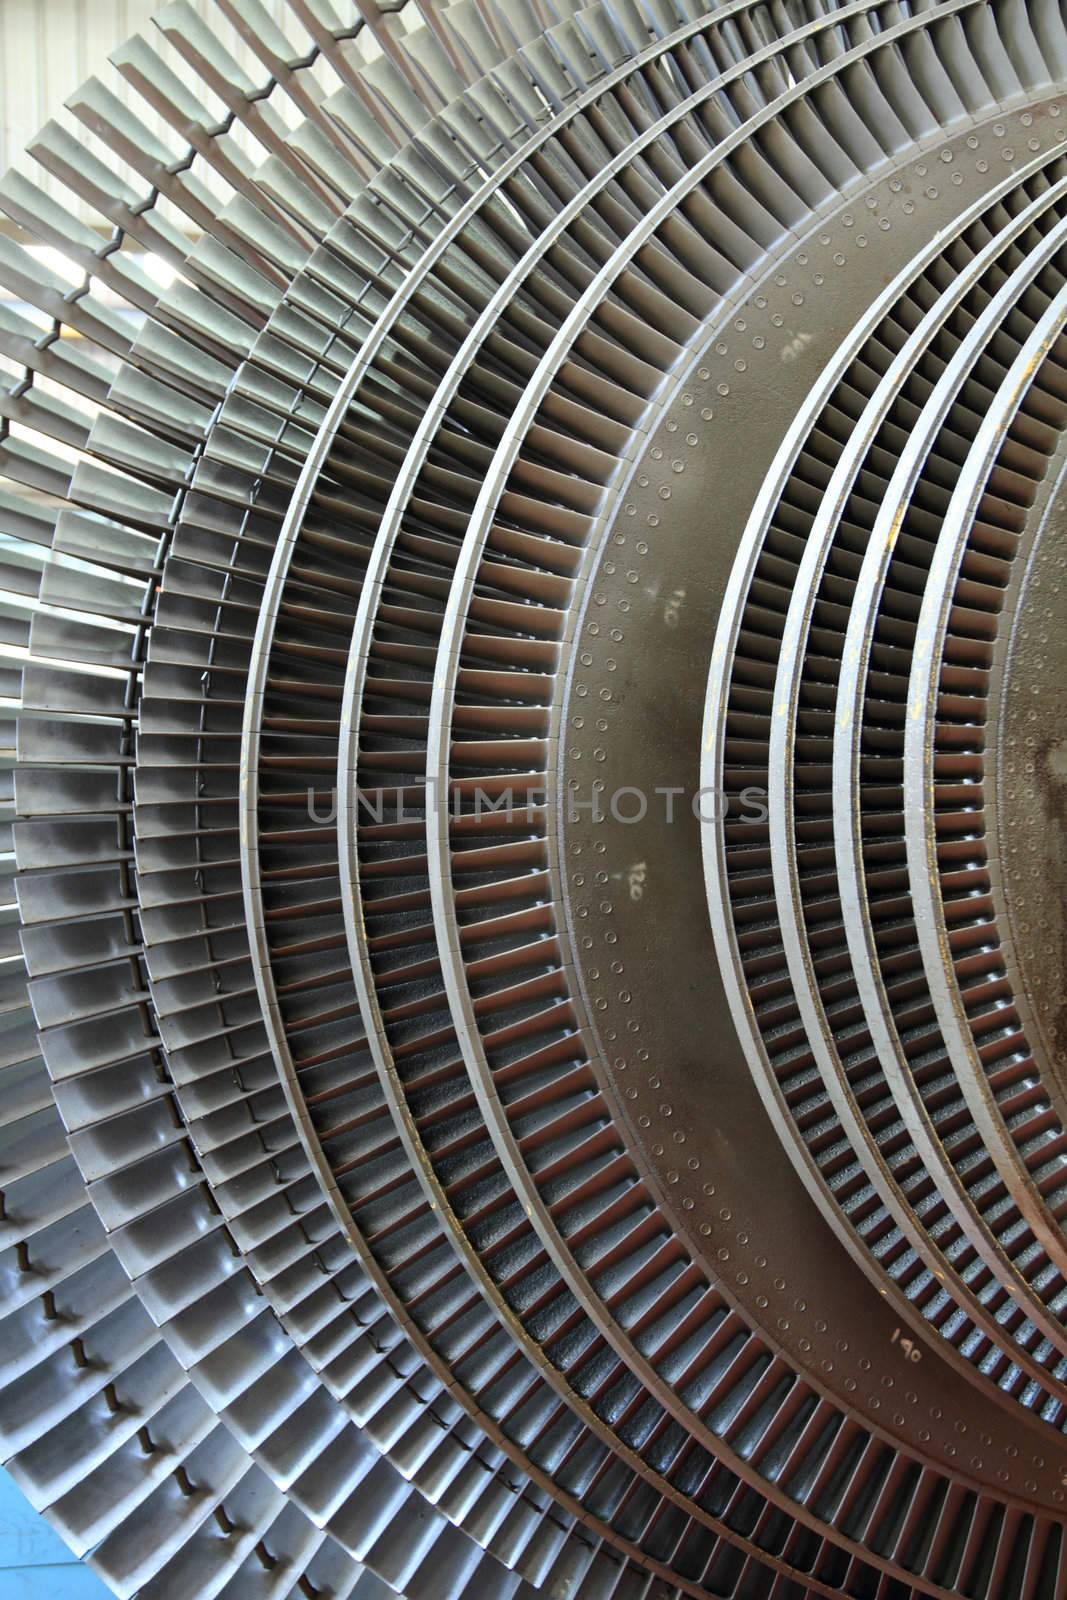 Steam generator turbine by photosoup